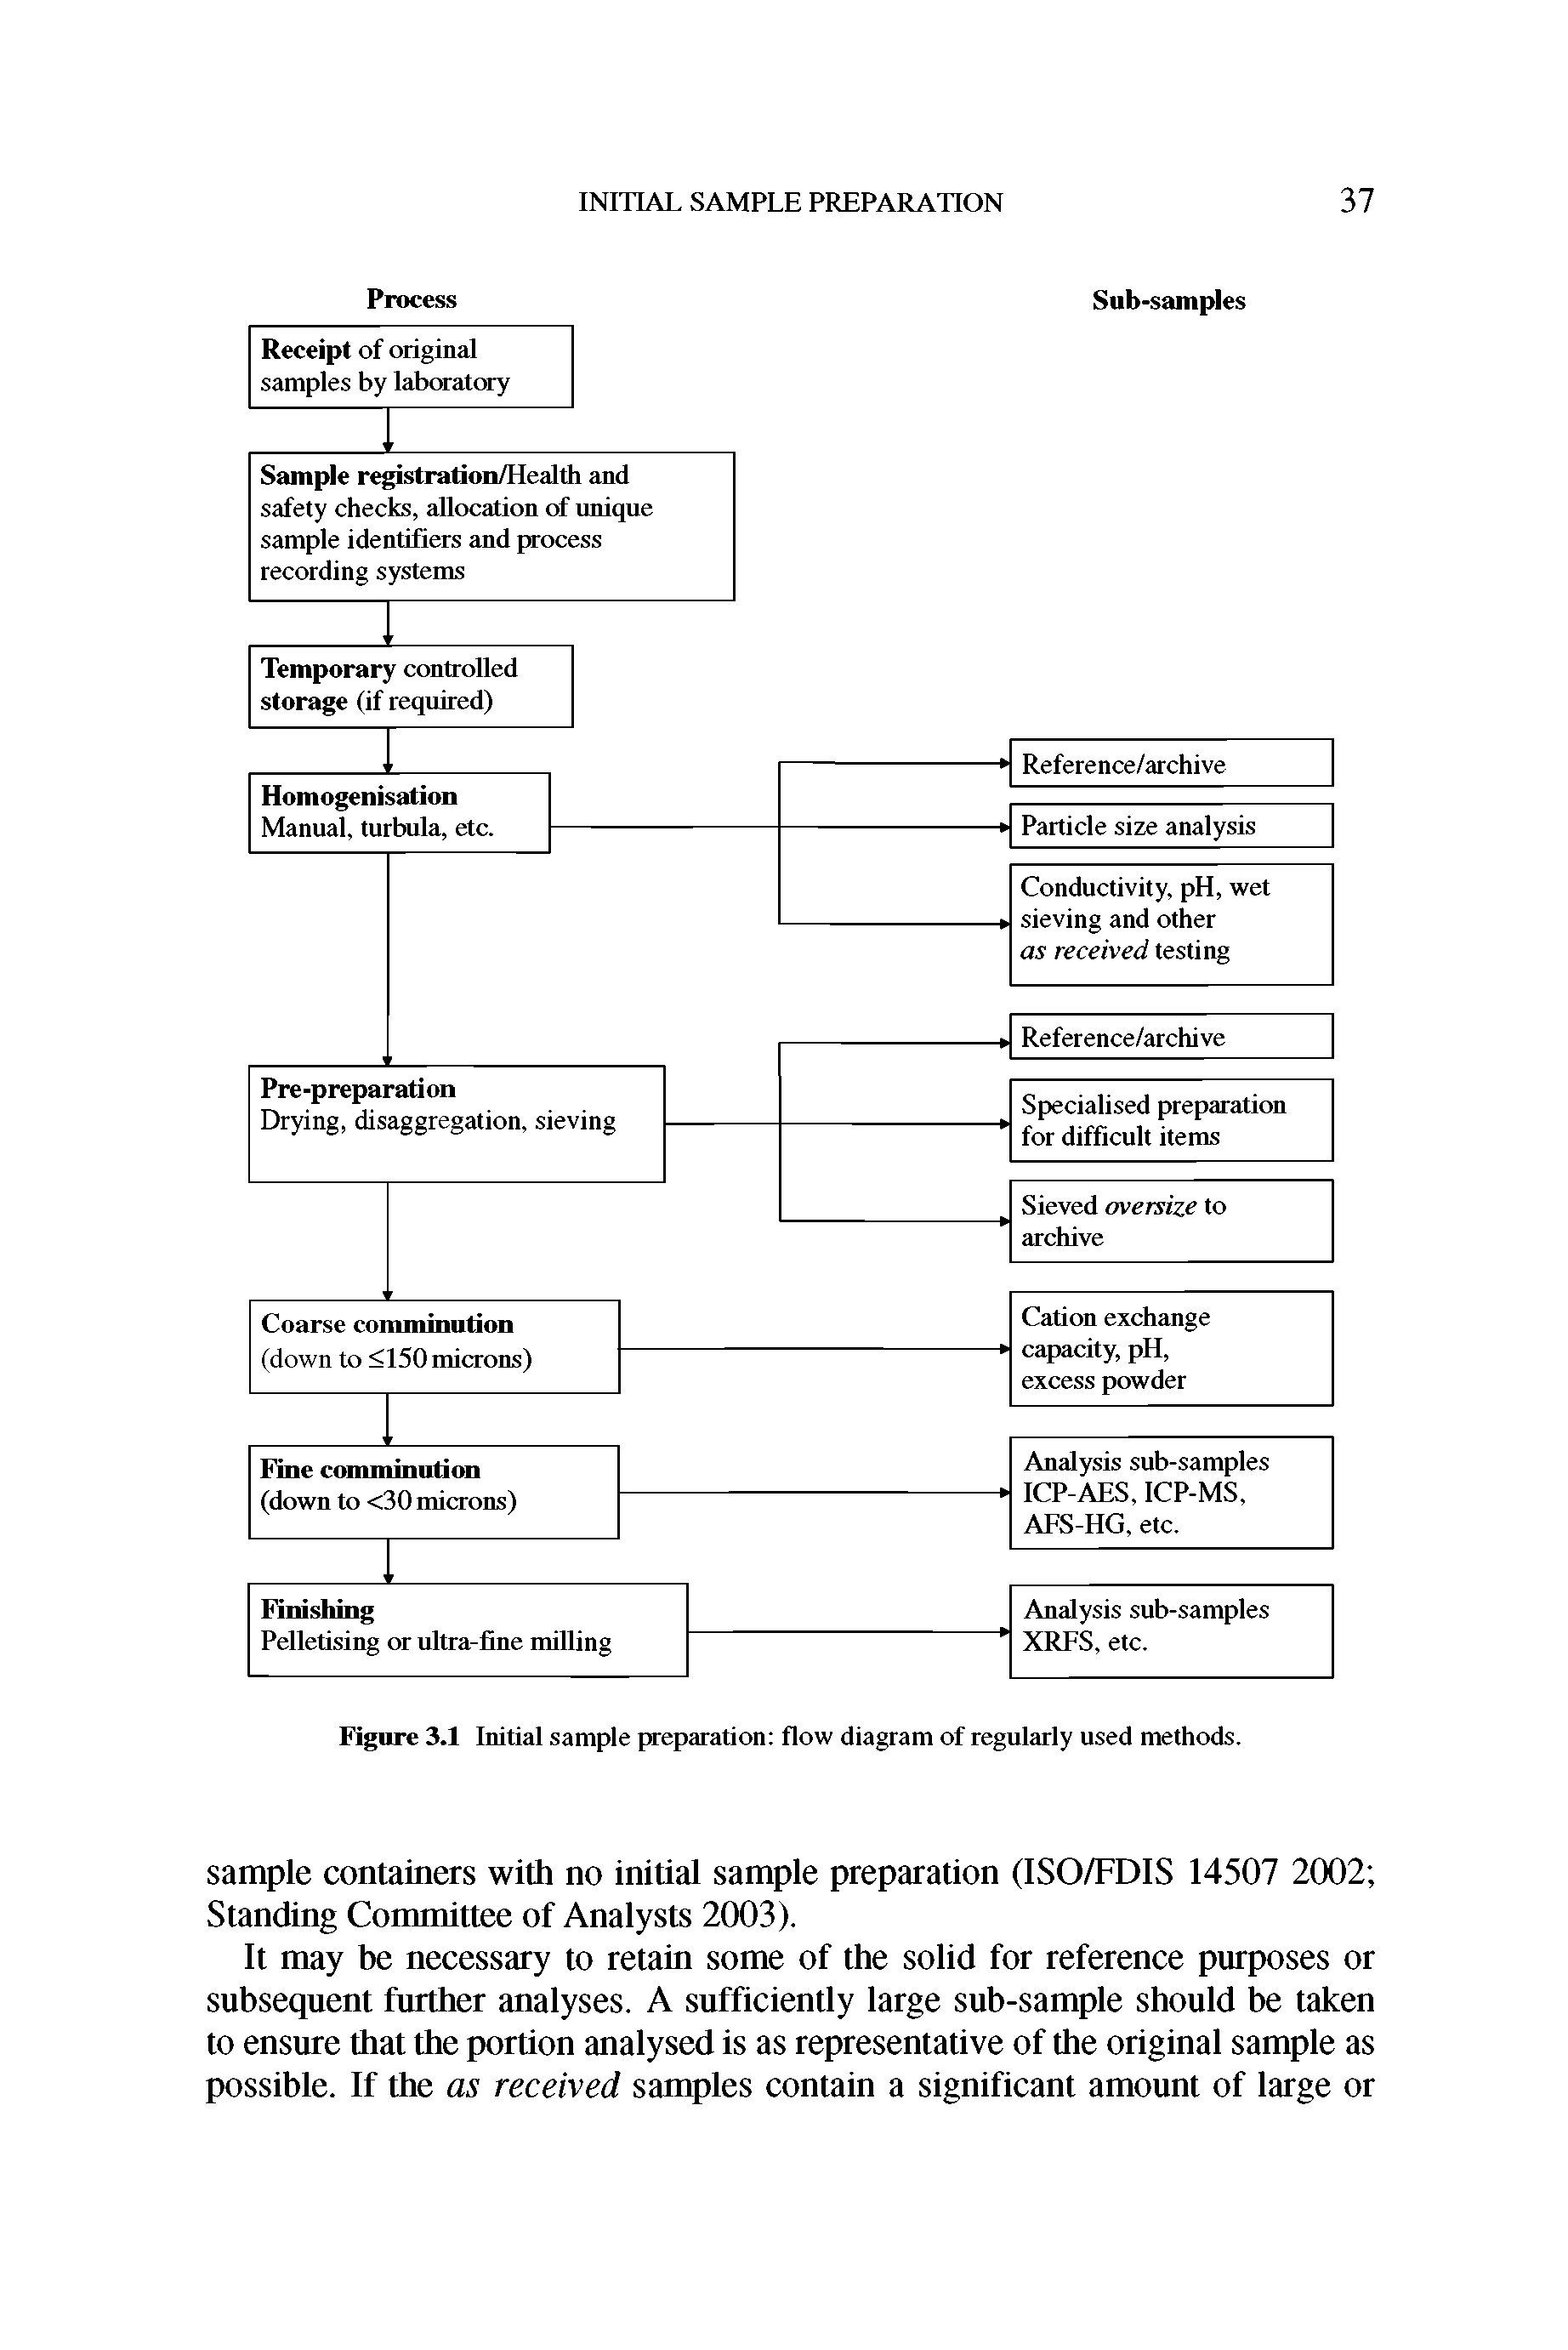 Figure 3.1 Initial sample preparation flow diagram of regularly used methods.